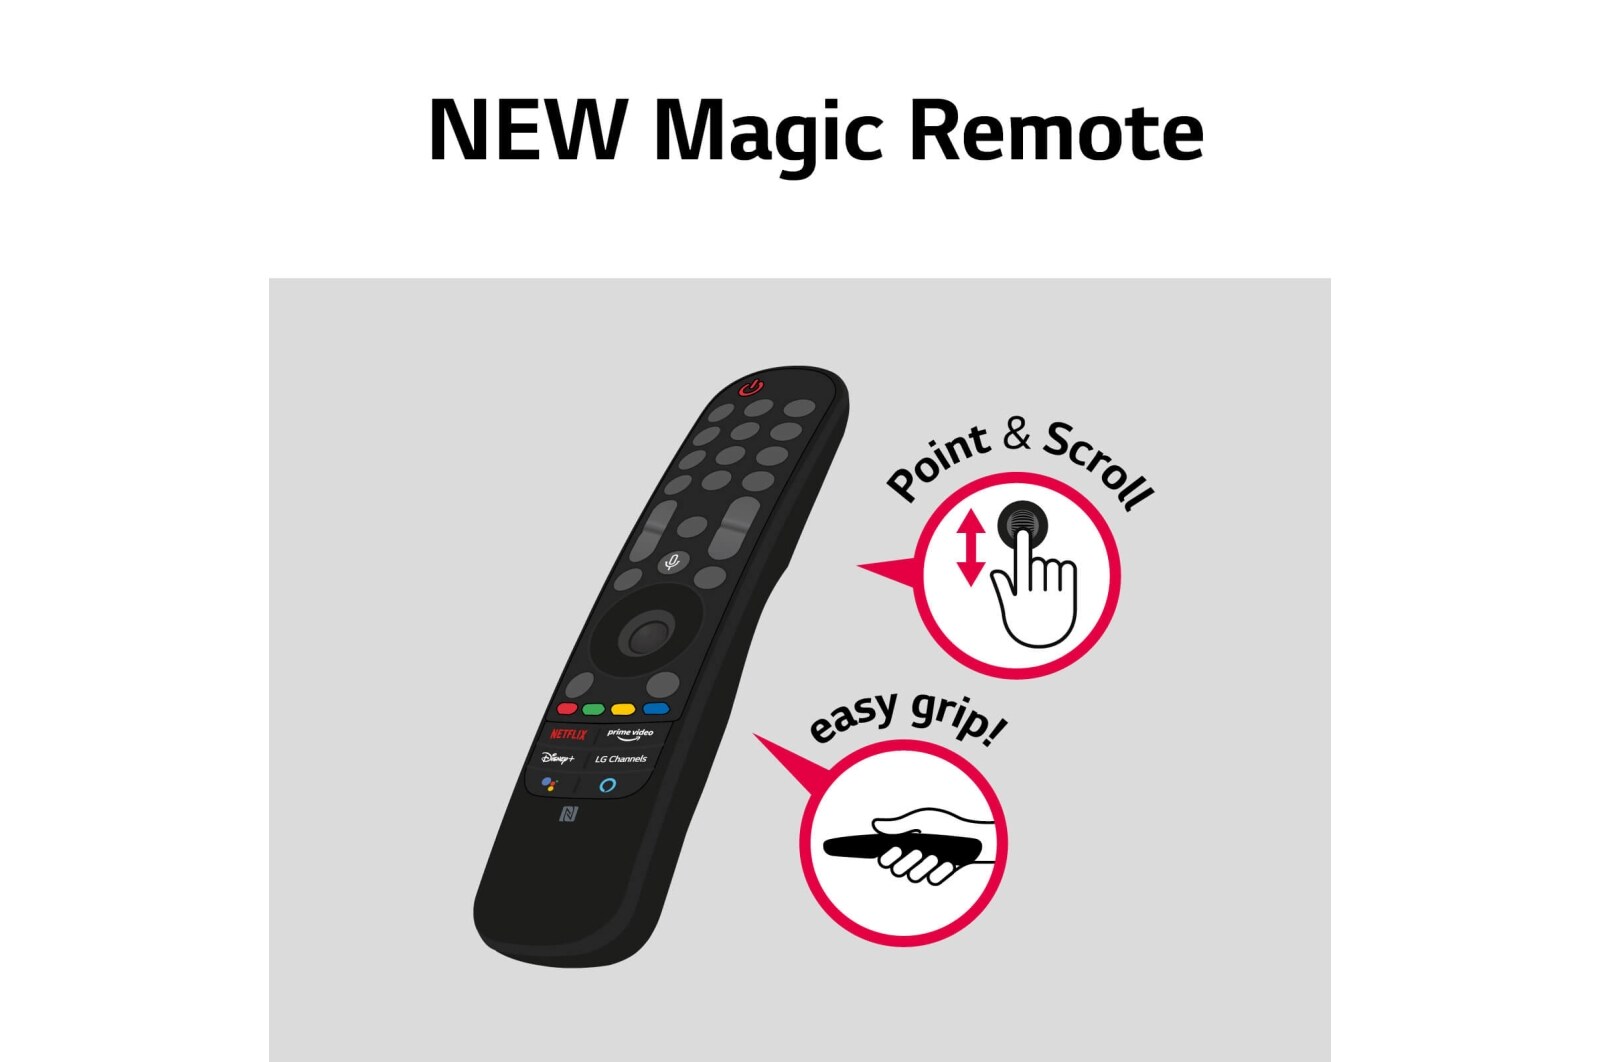 LG OLED 77'' OLED77Z2 8K TV UHD TV Smart TV + Magic Remote LG